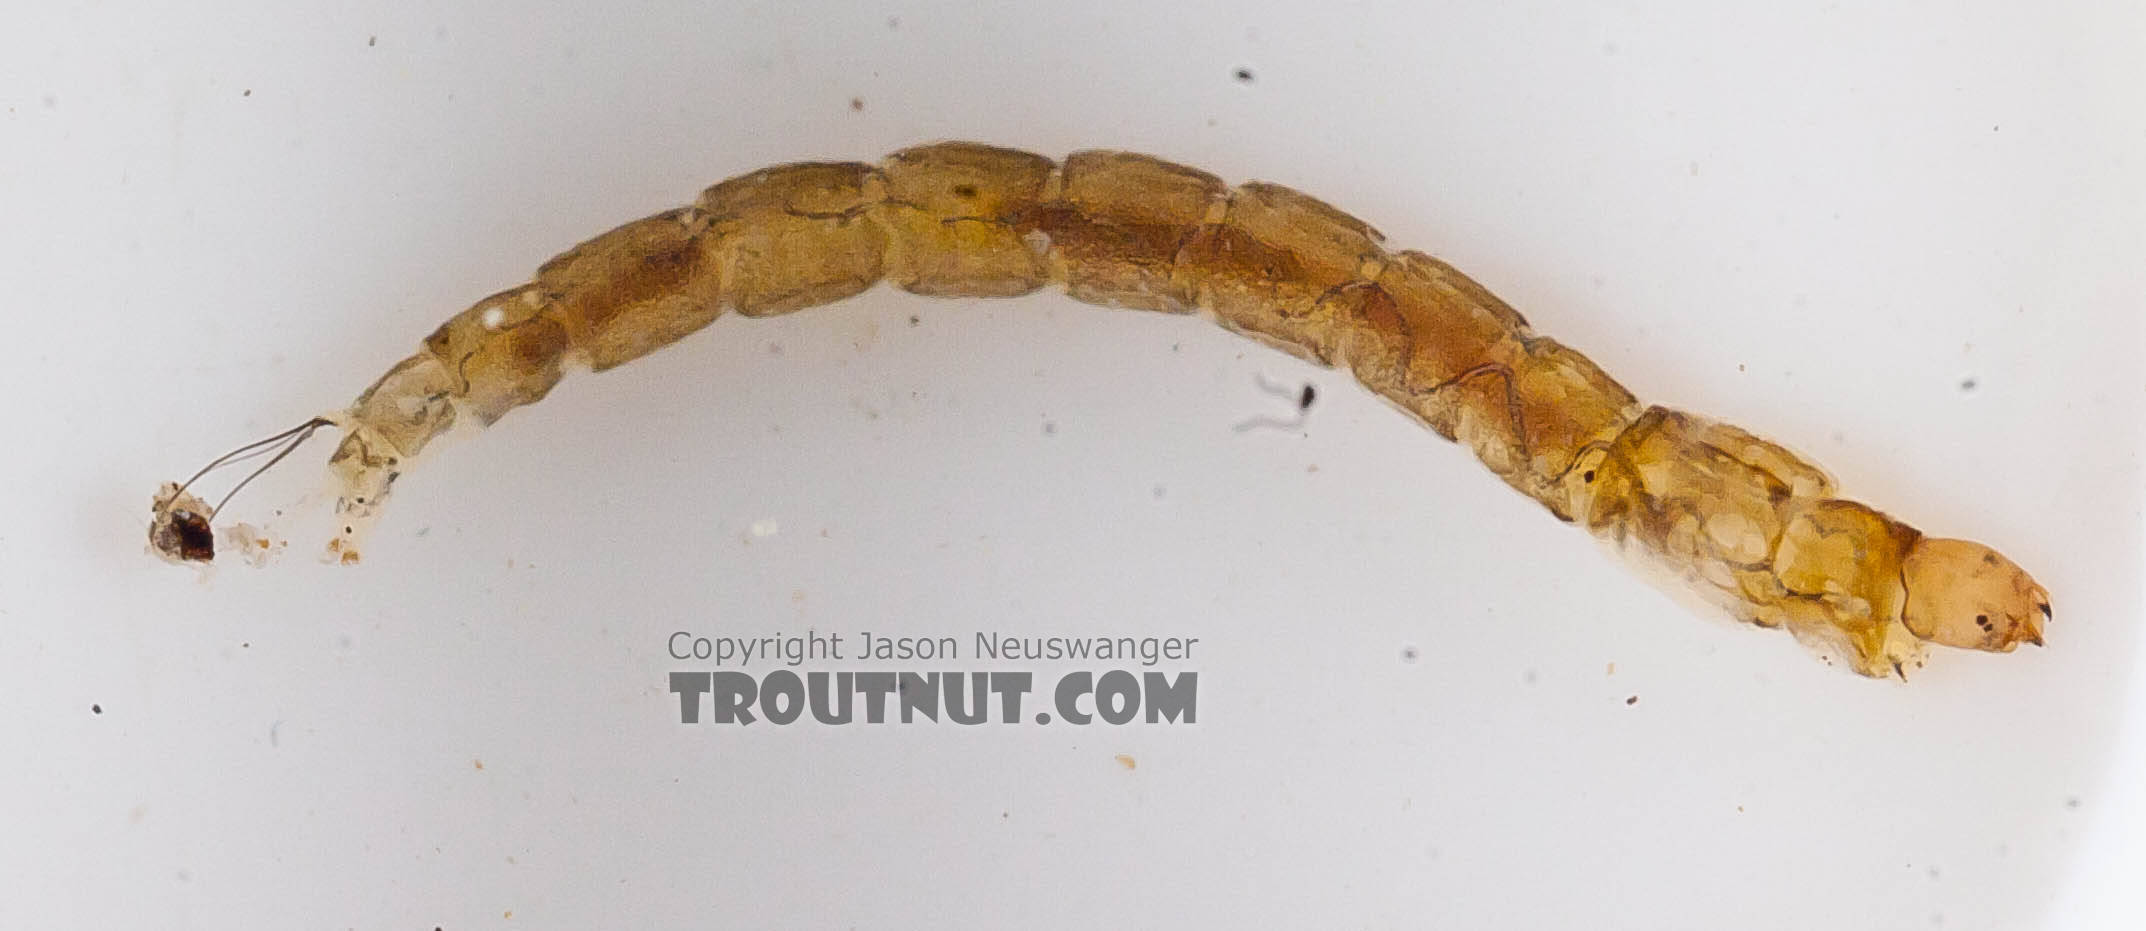 Chironomidae (Midges) Midge Larva from the Chena River in Alaska